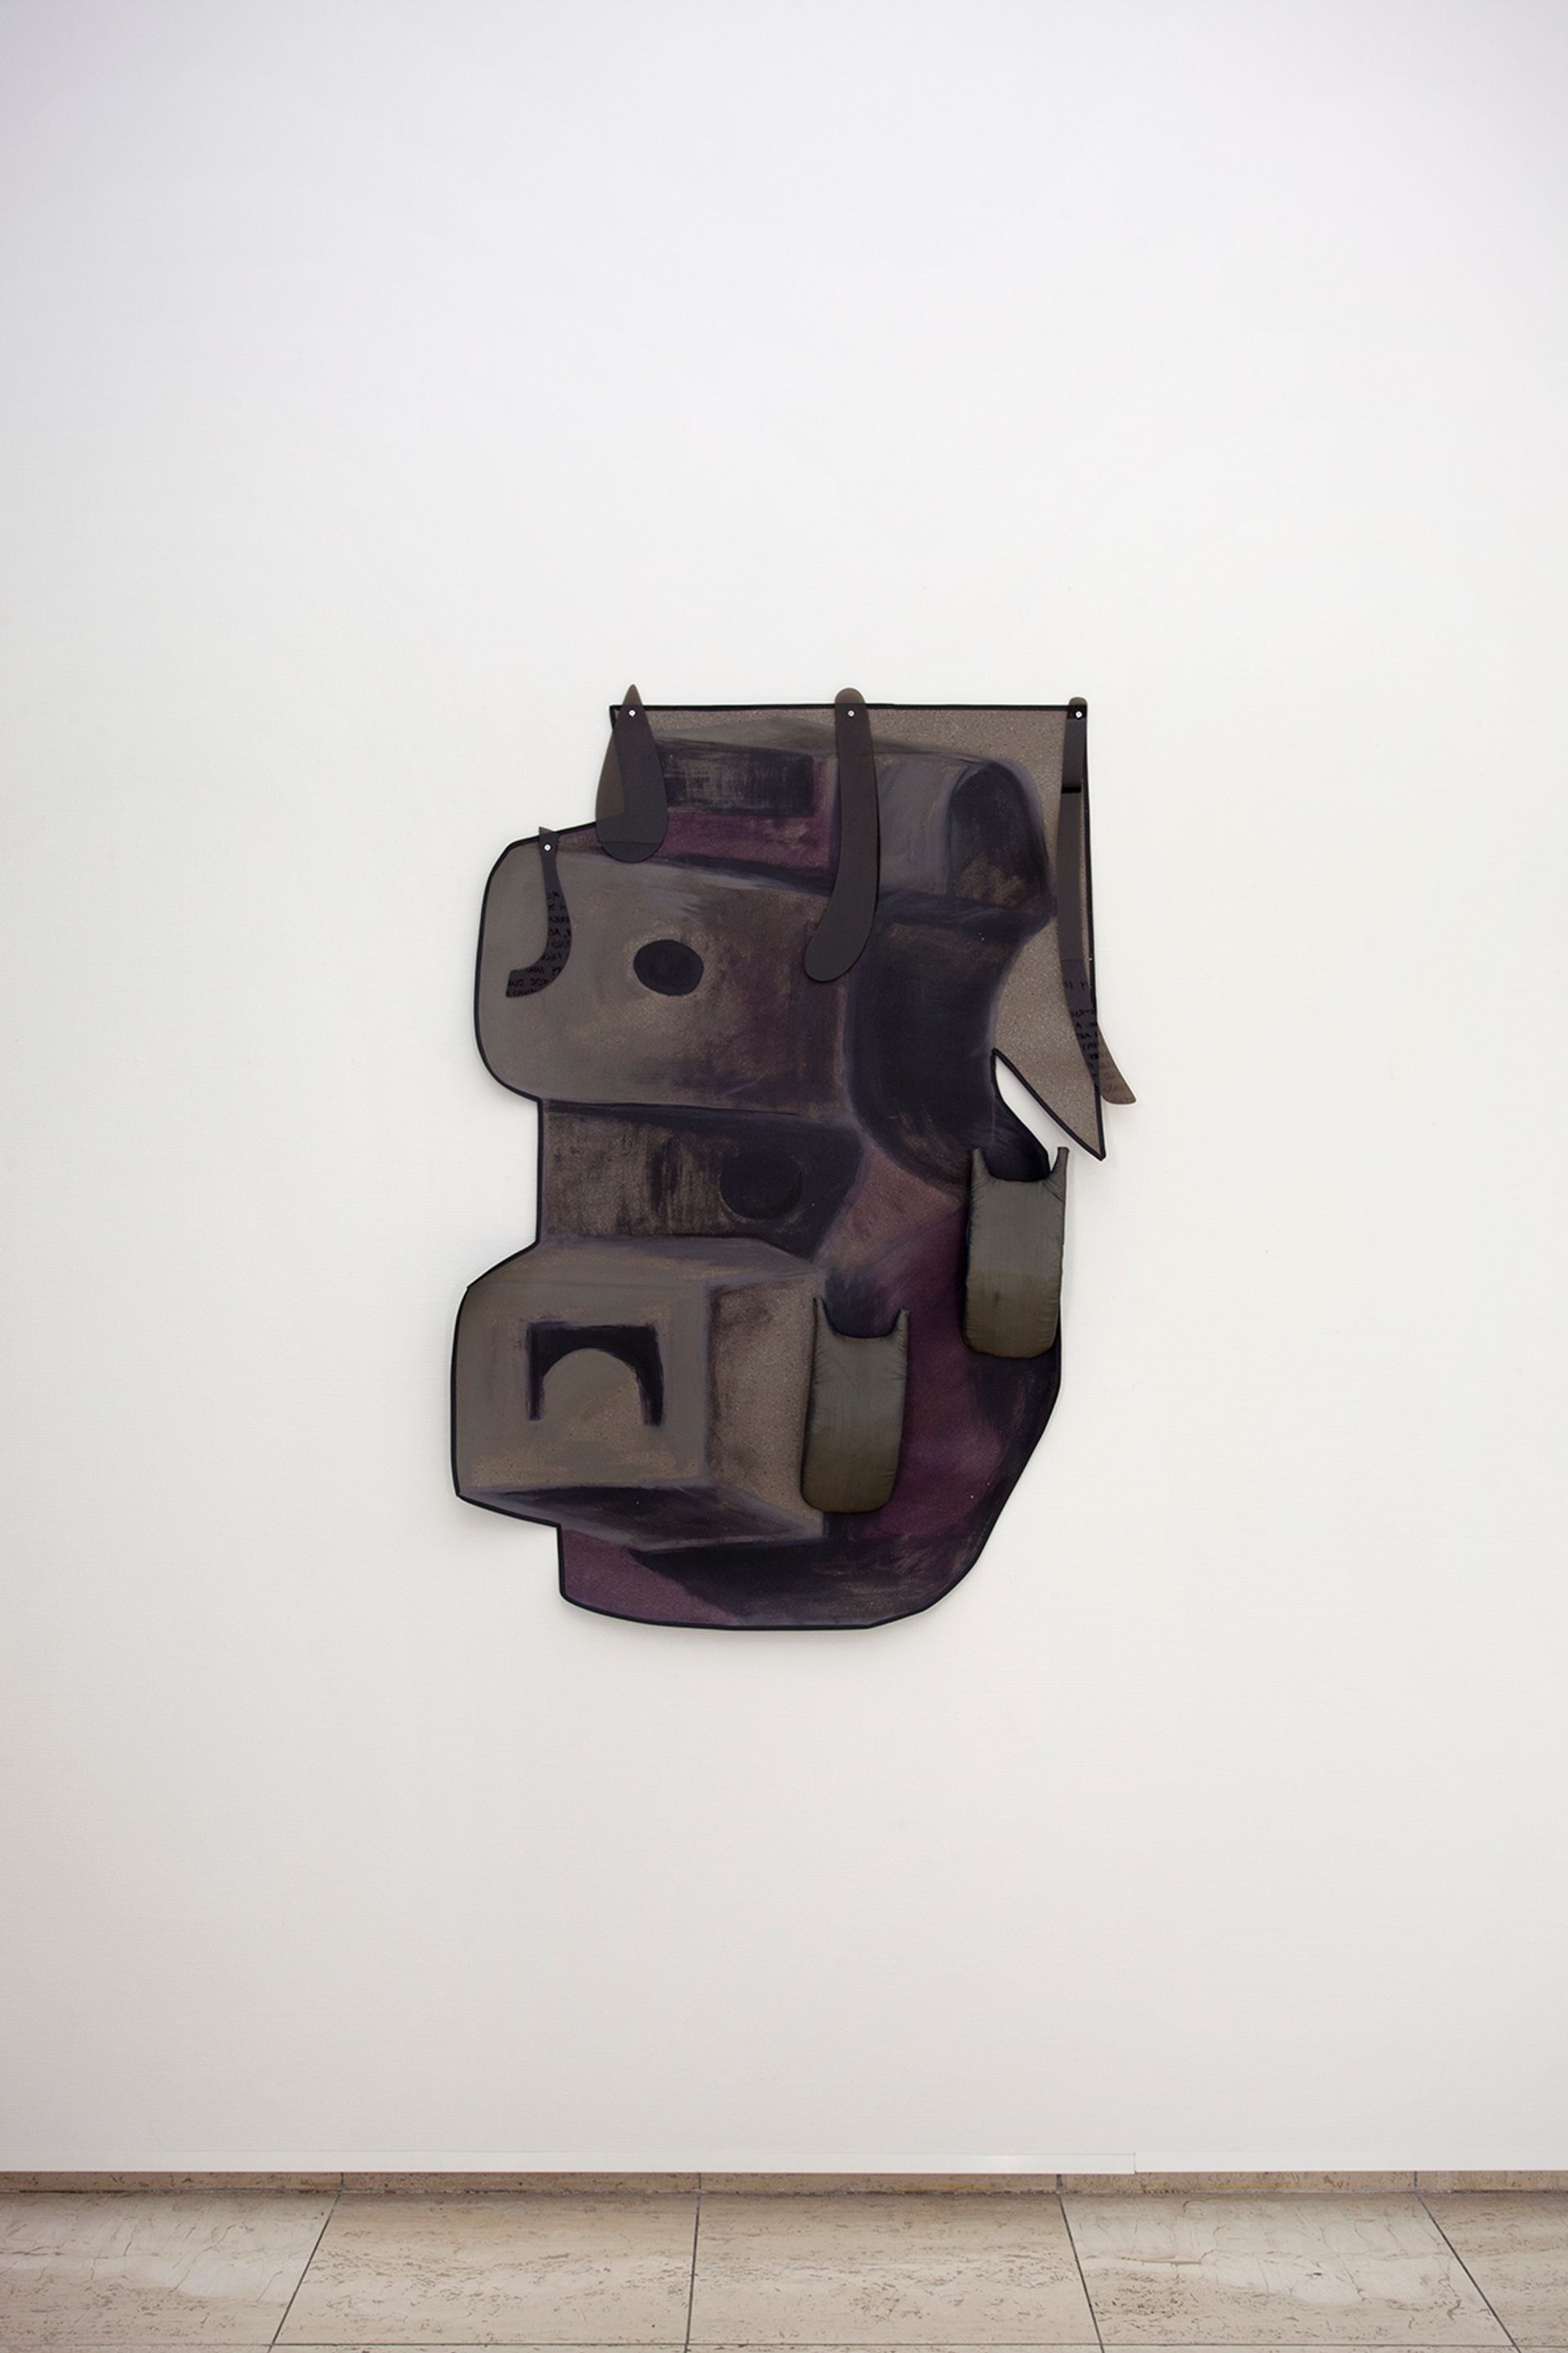 Ana Navas, Waist Pad (after Moore), 2018, pvc, acrylic, fabric, foam, plastic, 140 × 100 cm, photo: Otto Polman